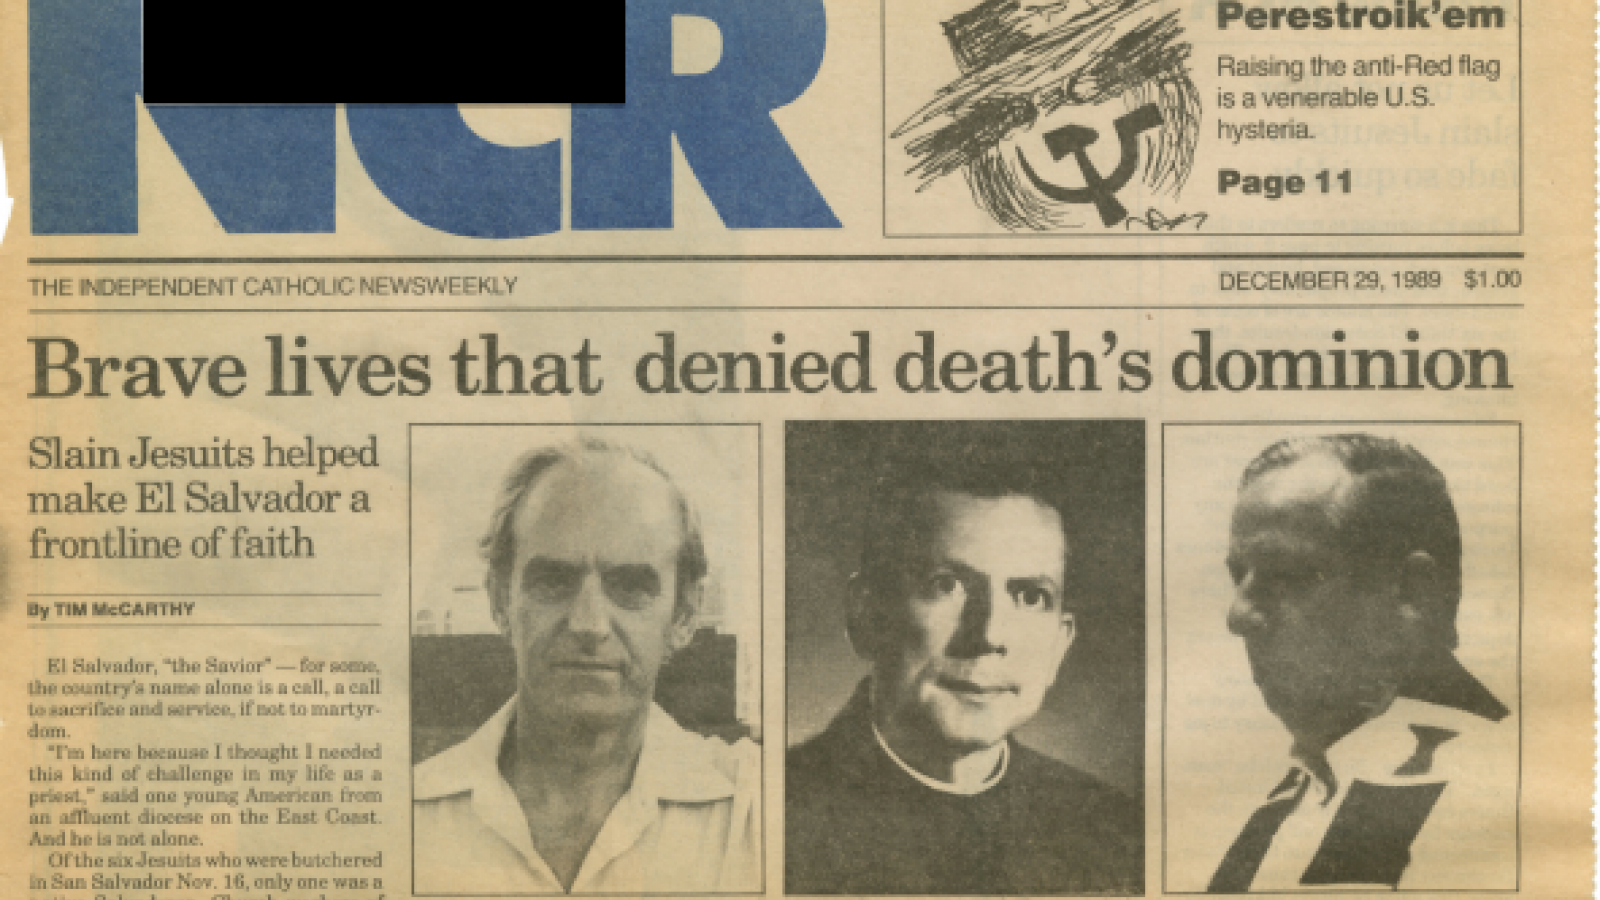 "Brave lives that denied death's dominion" National Catholic Register, Dec. 29, 1989